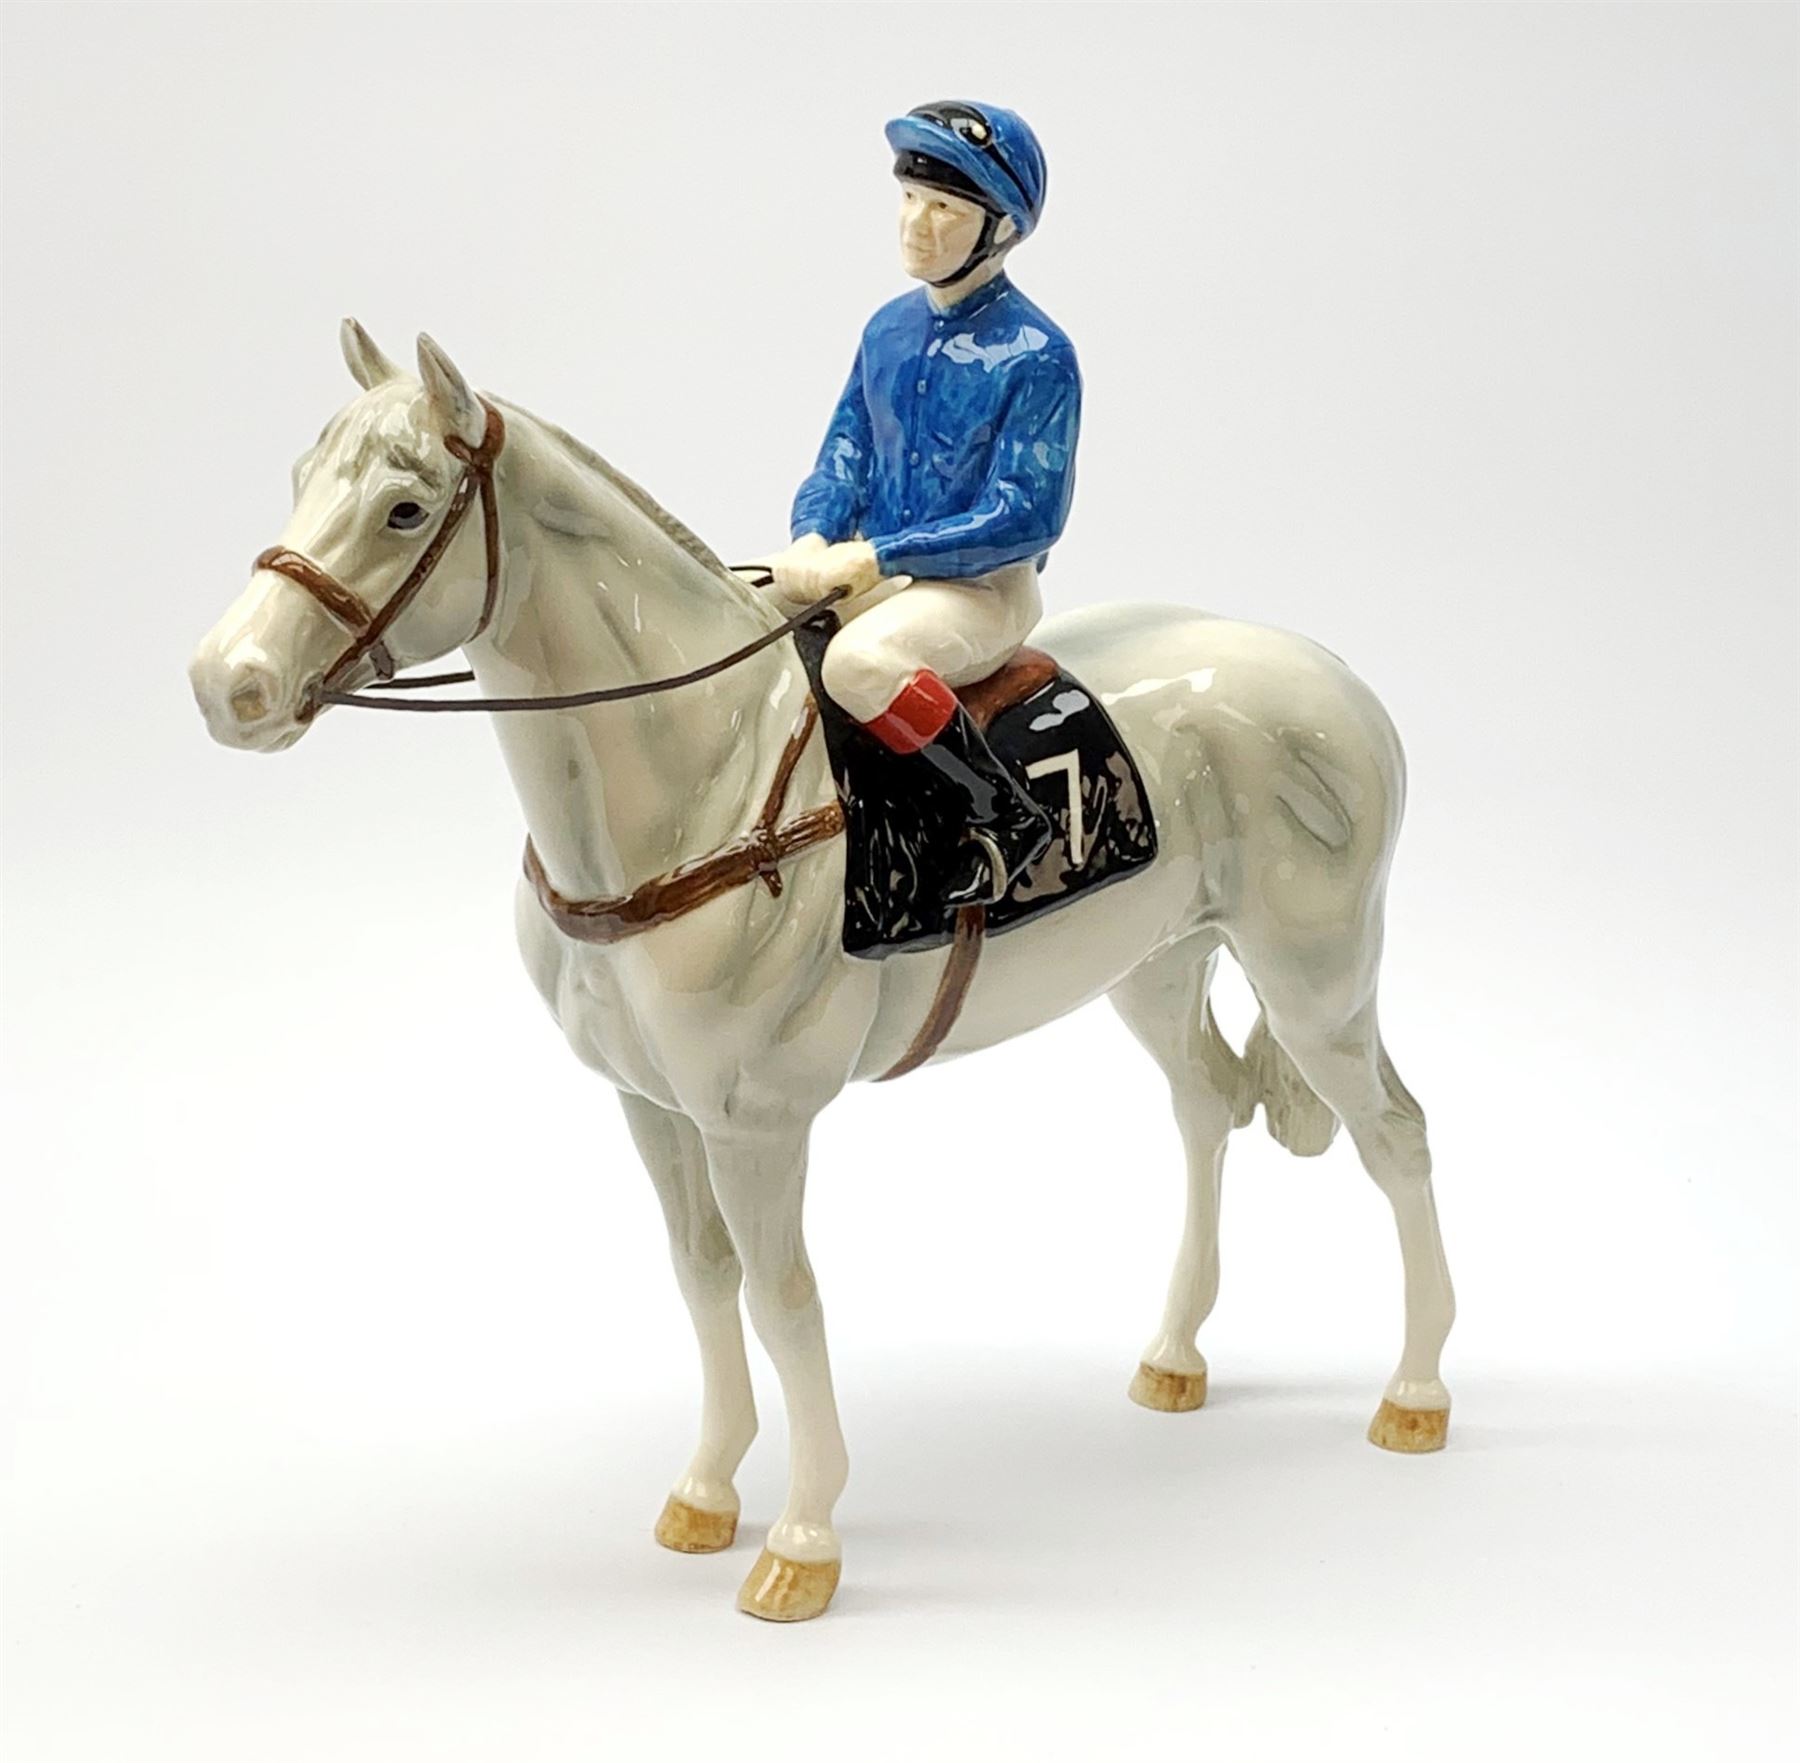 A limited edition John Beswick jockey on horseback